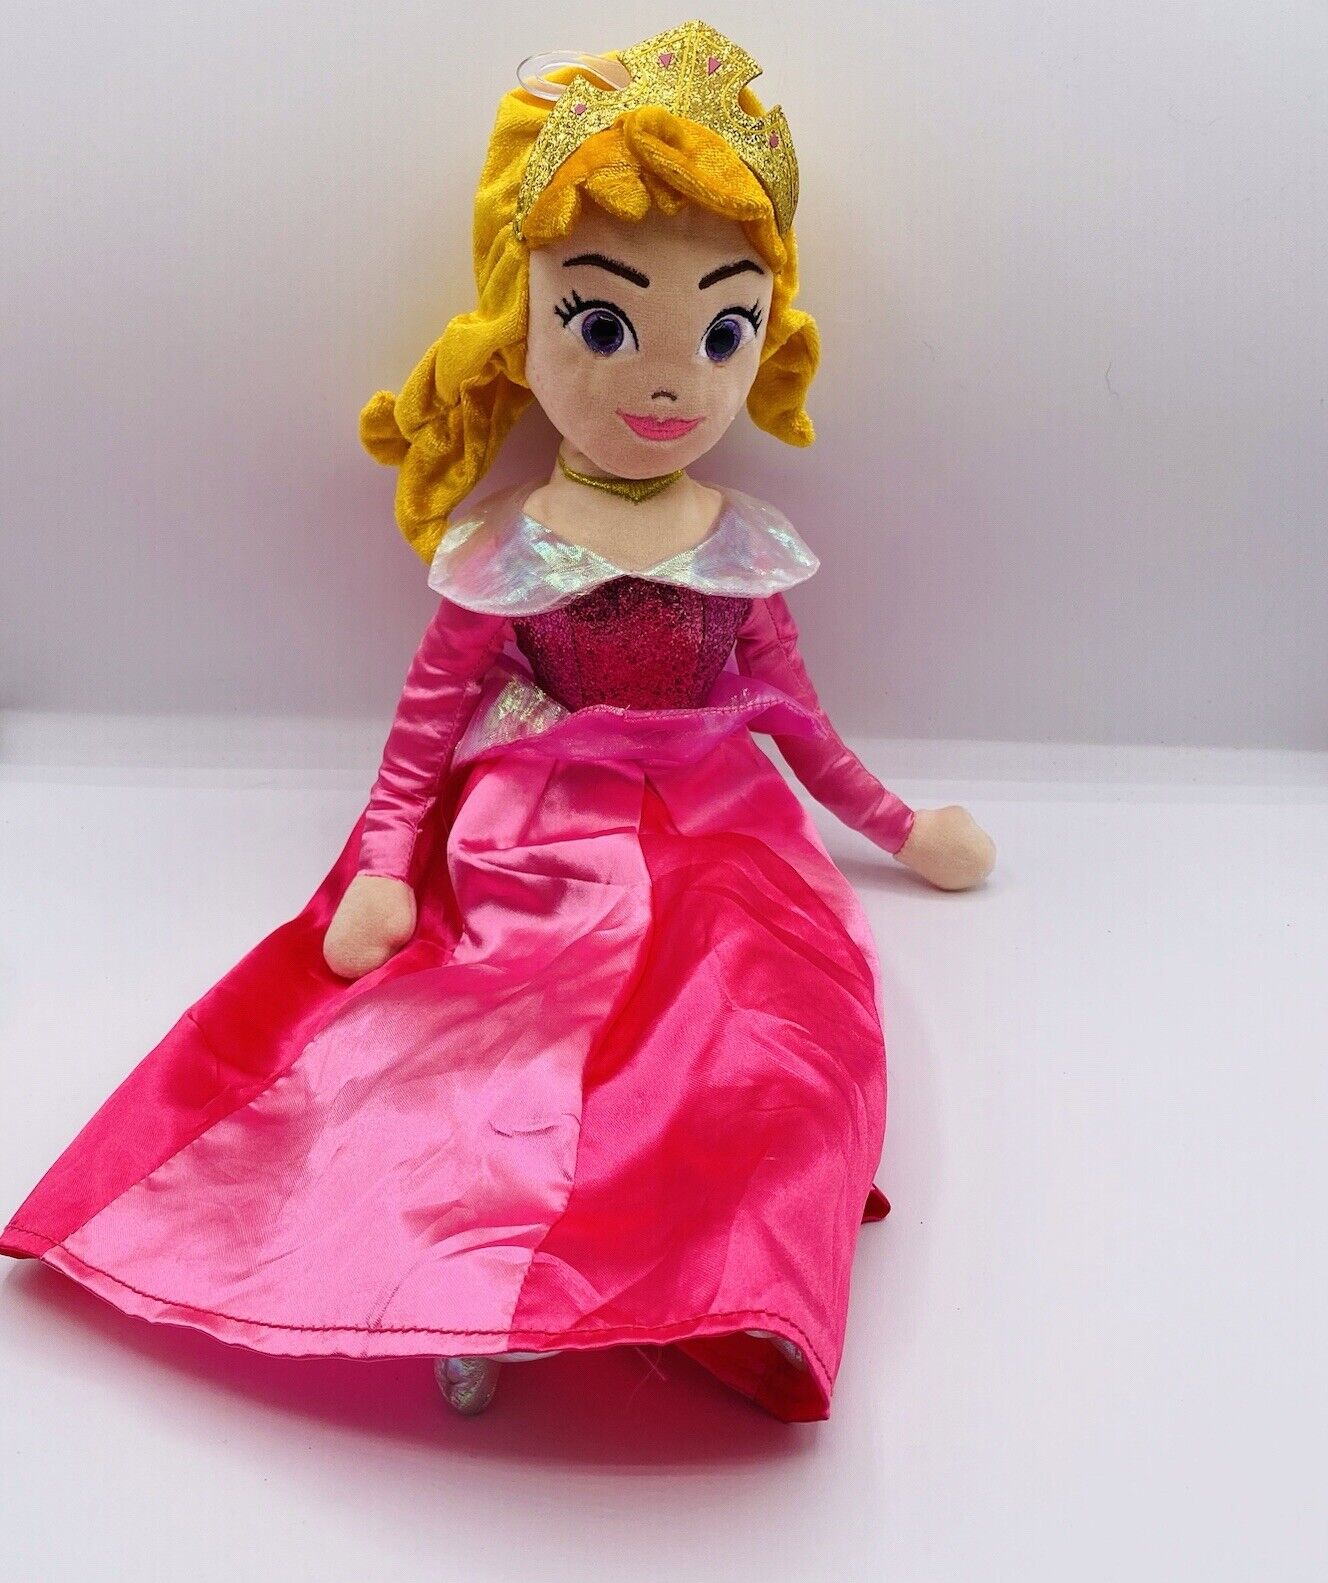 Disney Store Princess Aurora Plush Doll. Sleeping Beauty Plush Doll 18”